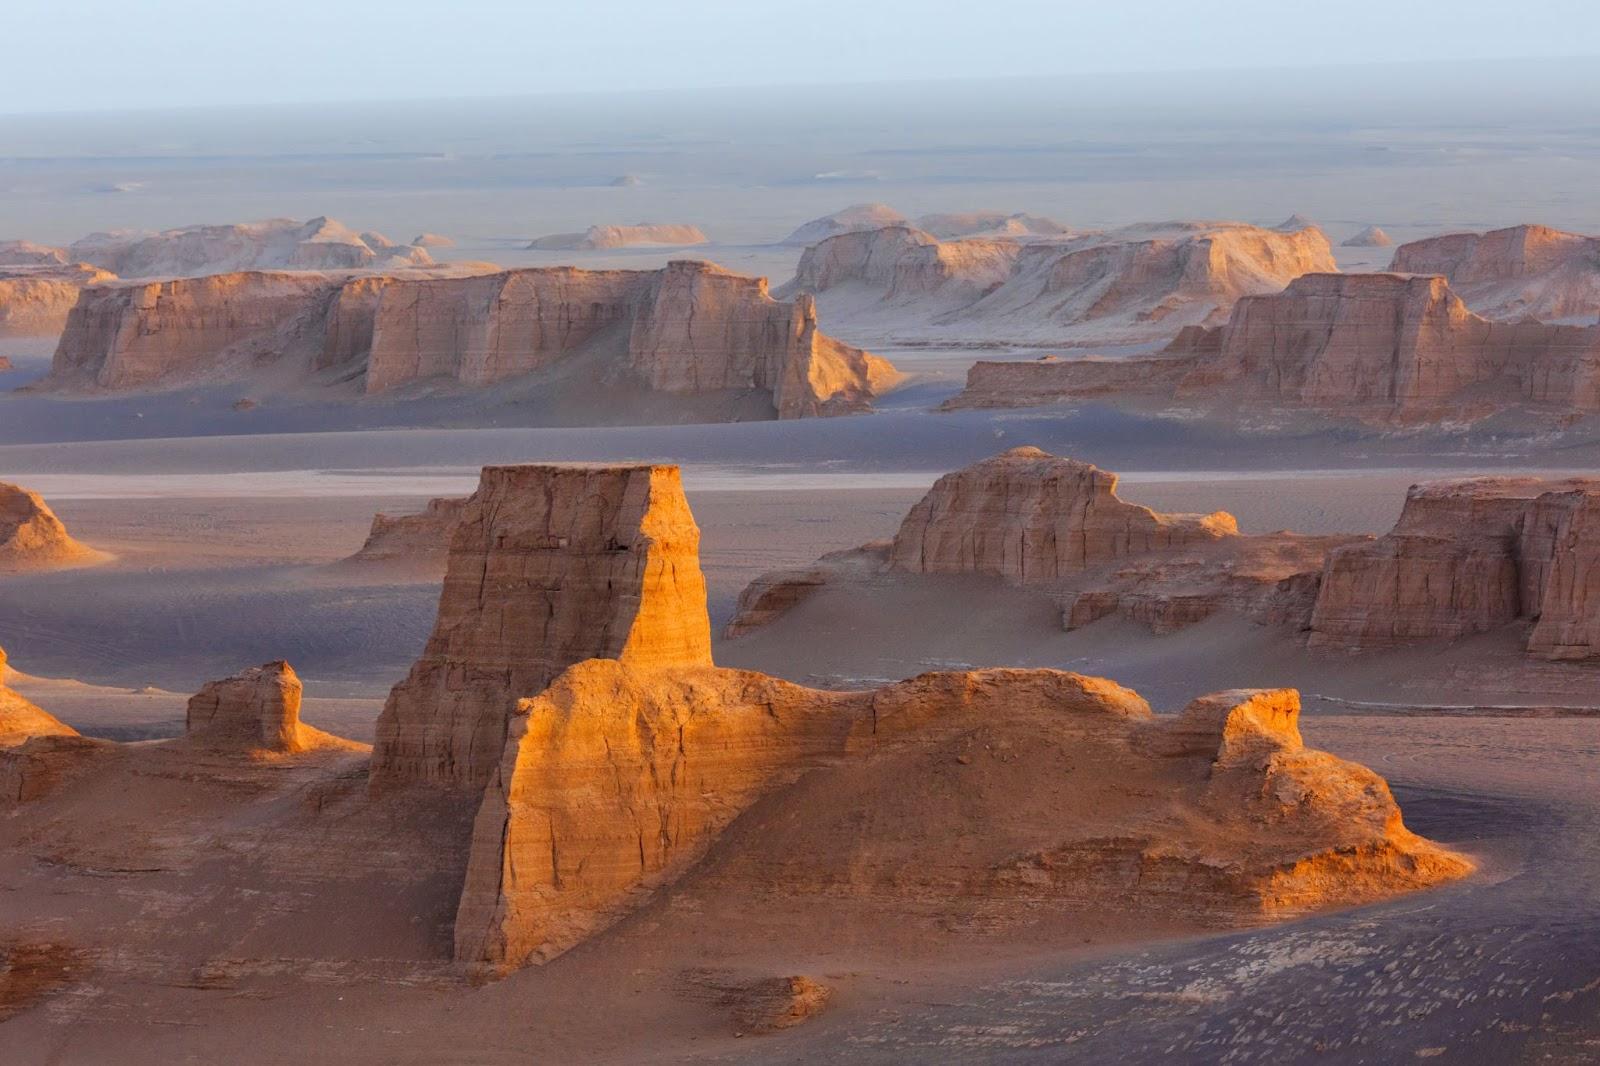 Sand towers of Kaluts in the Dasht-e-Lut desert. Iran